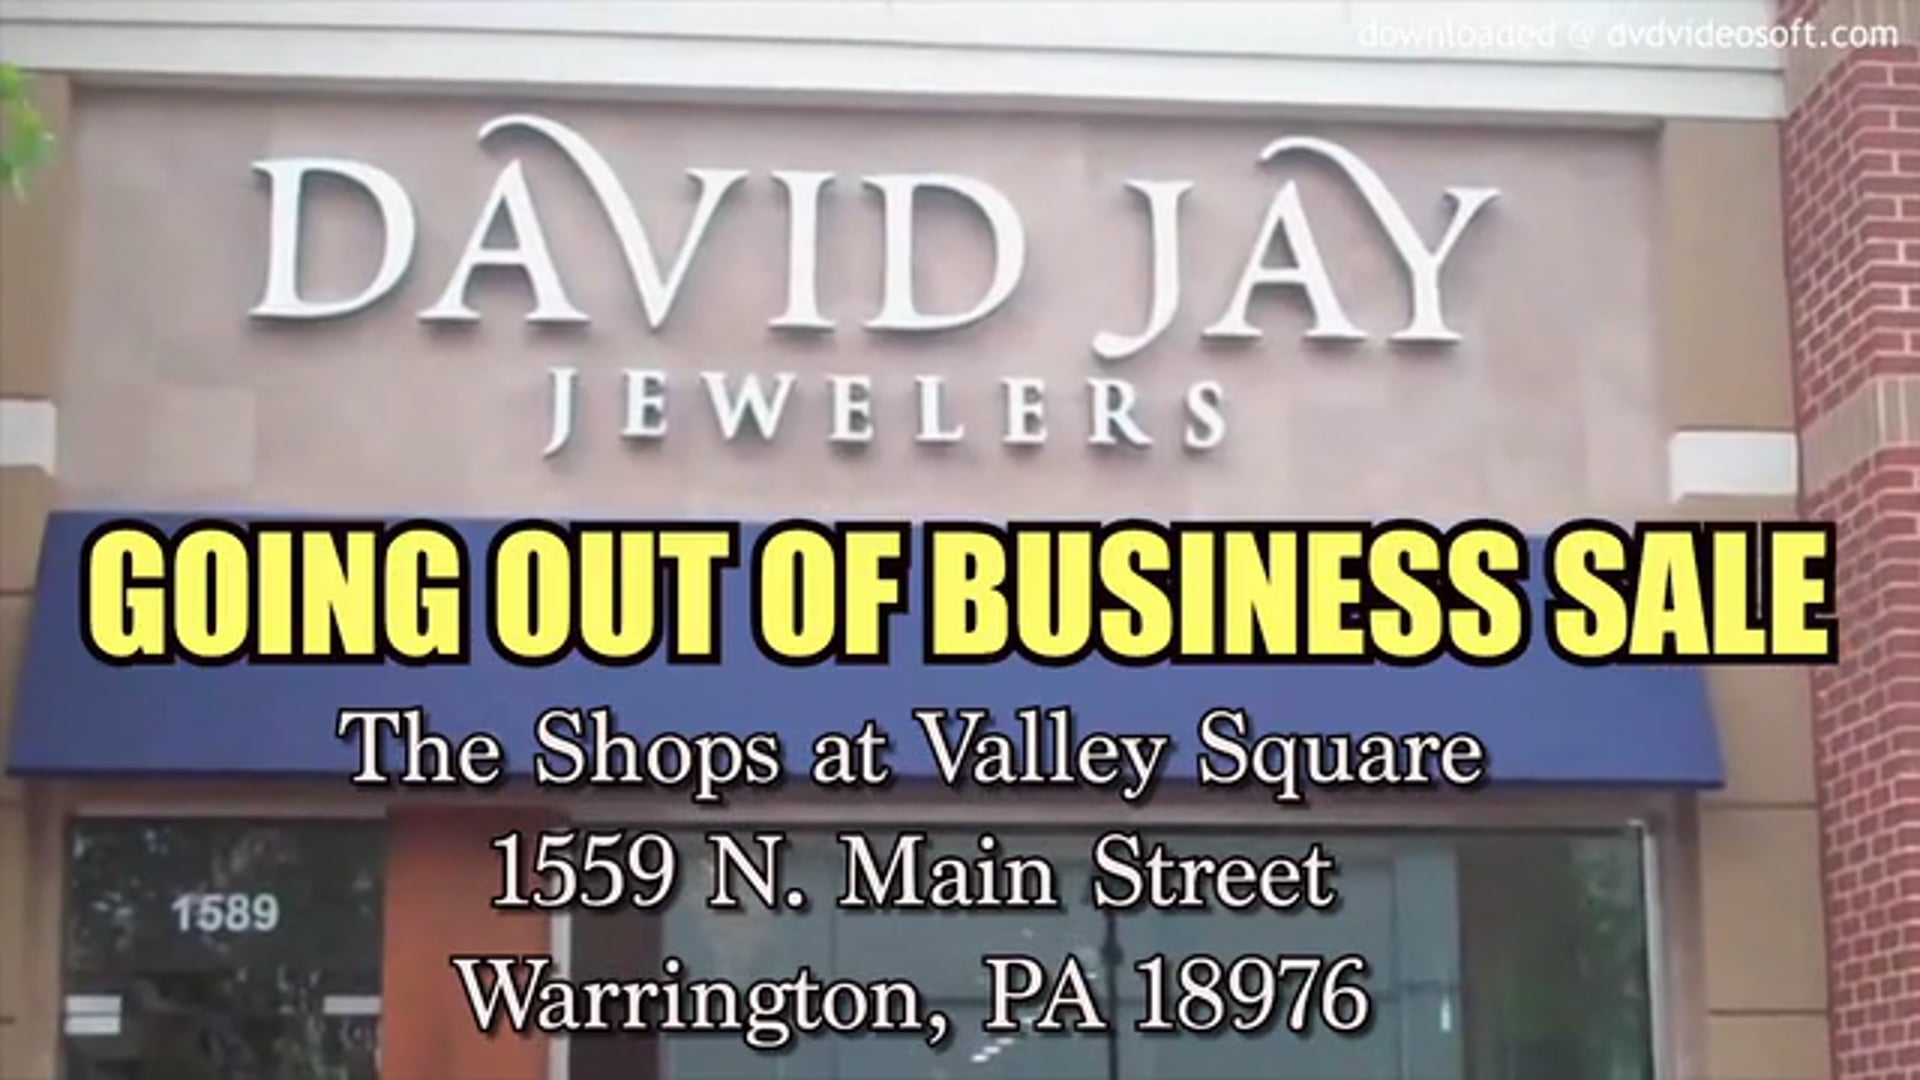 David Jay Jewelers